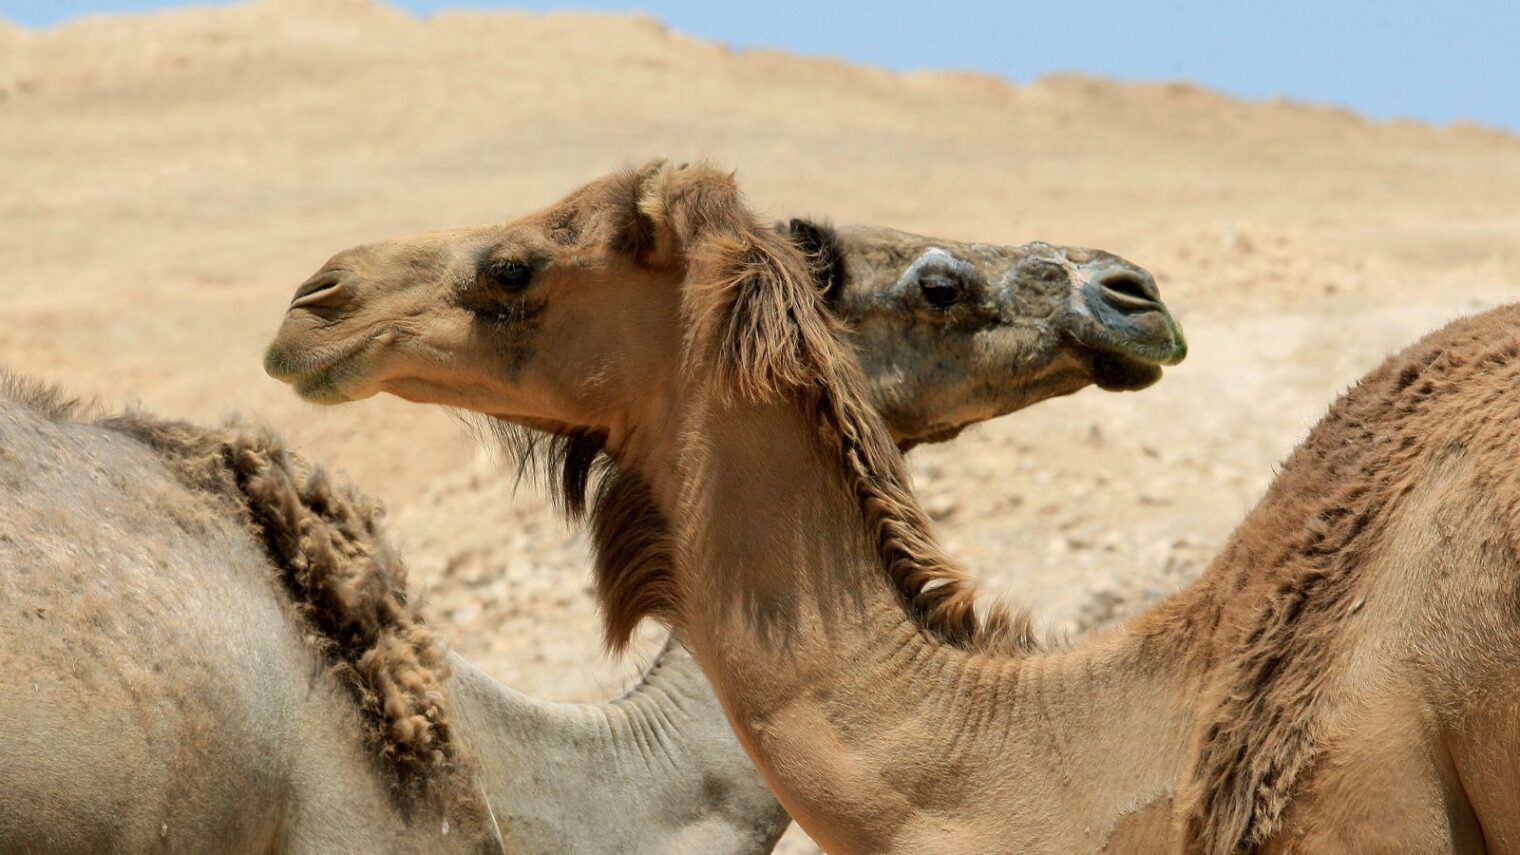 Camels pose a deadly danger on Israel’s desert roads. Photo by Moshe Shai/FLASH90